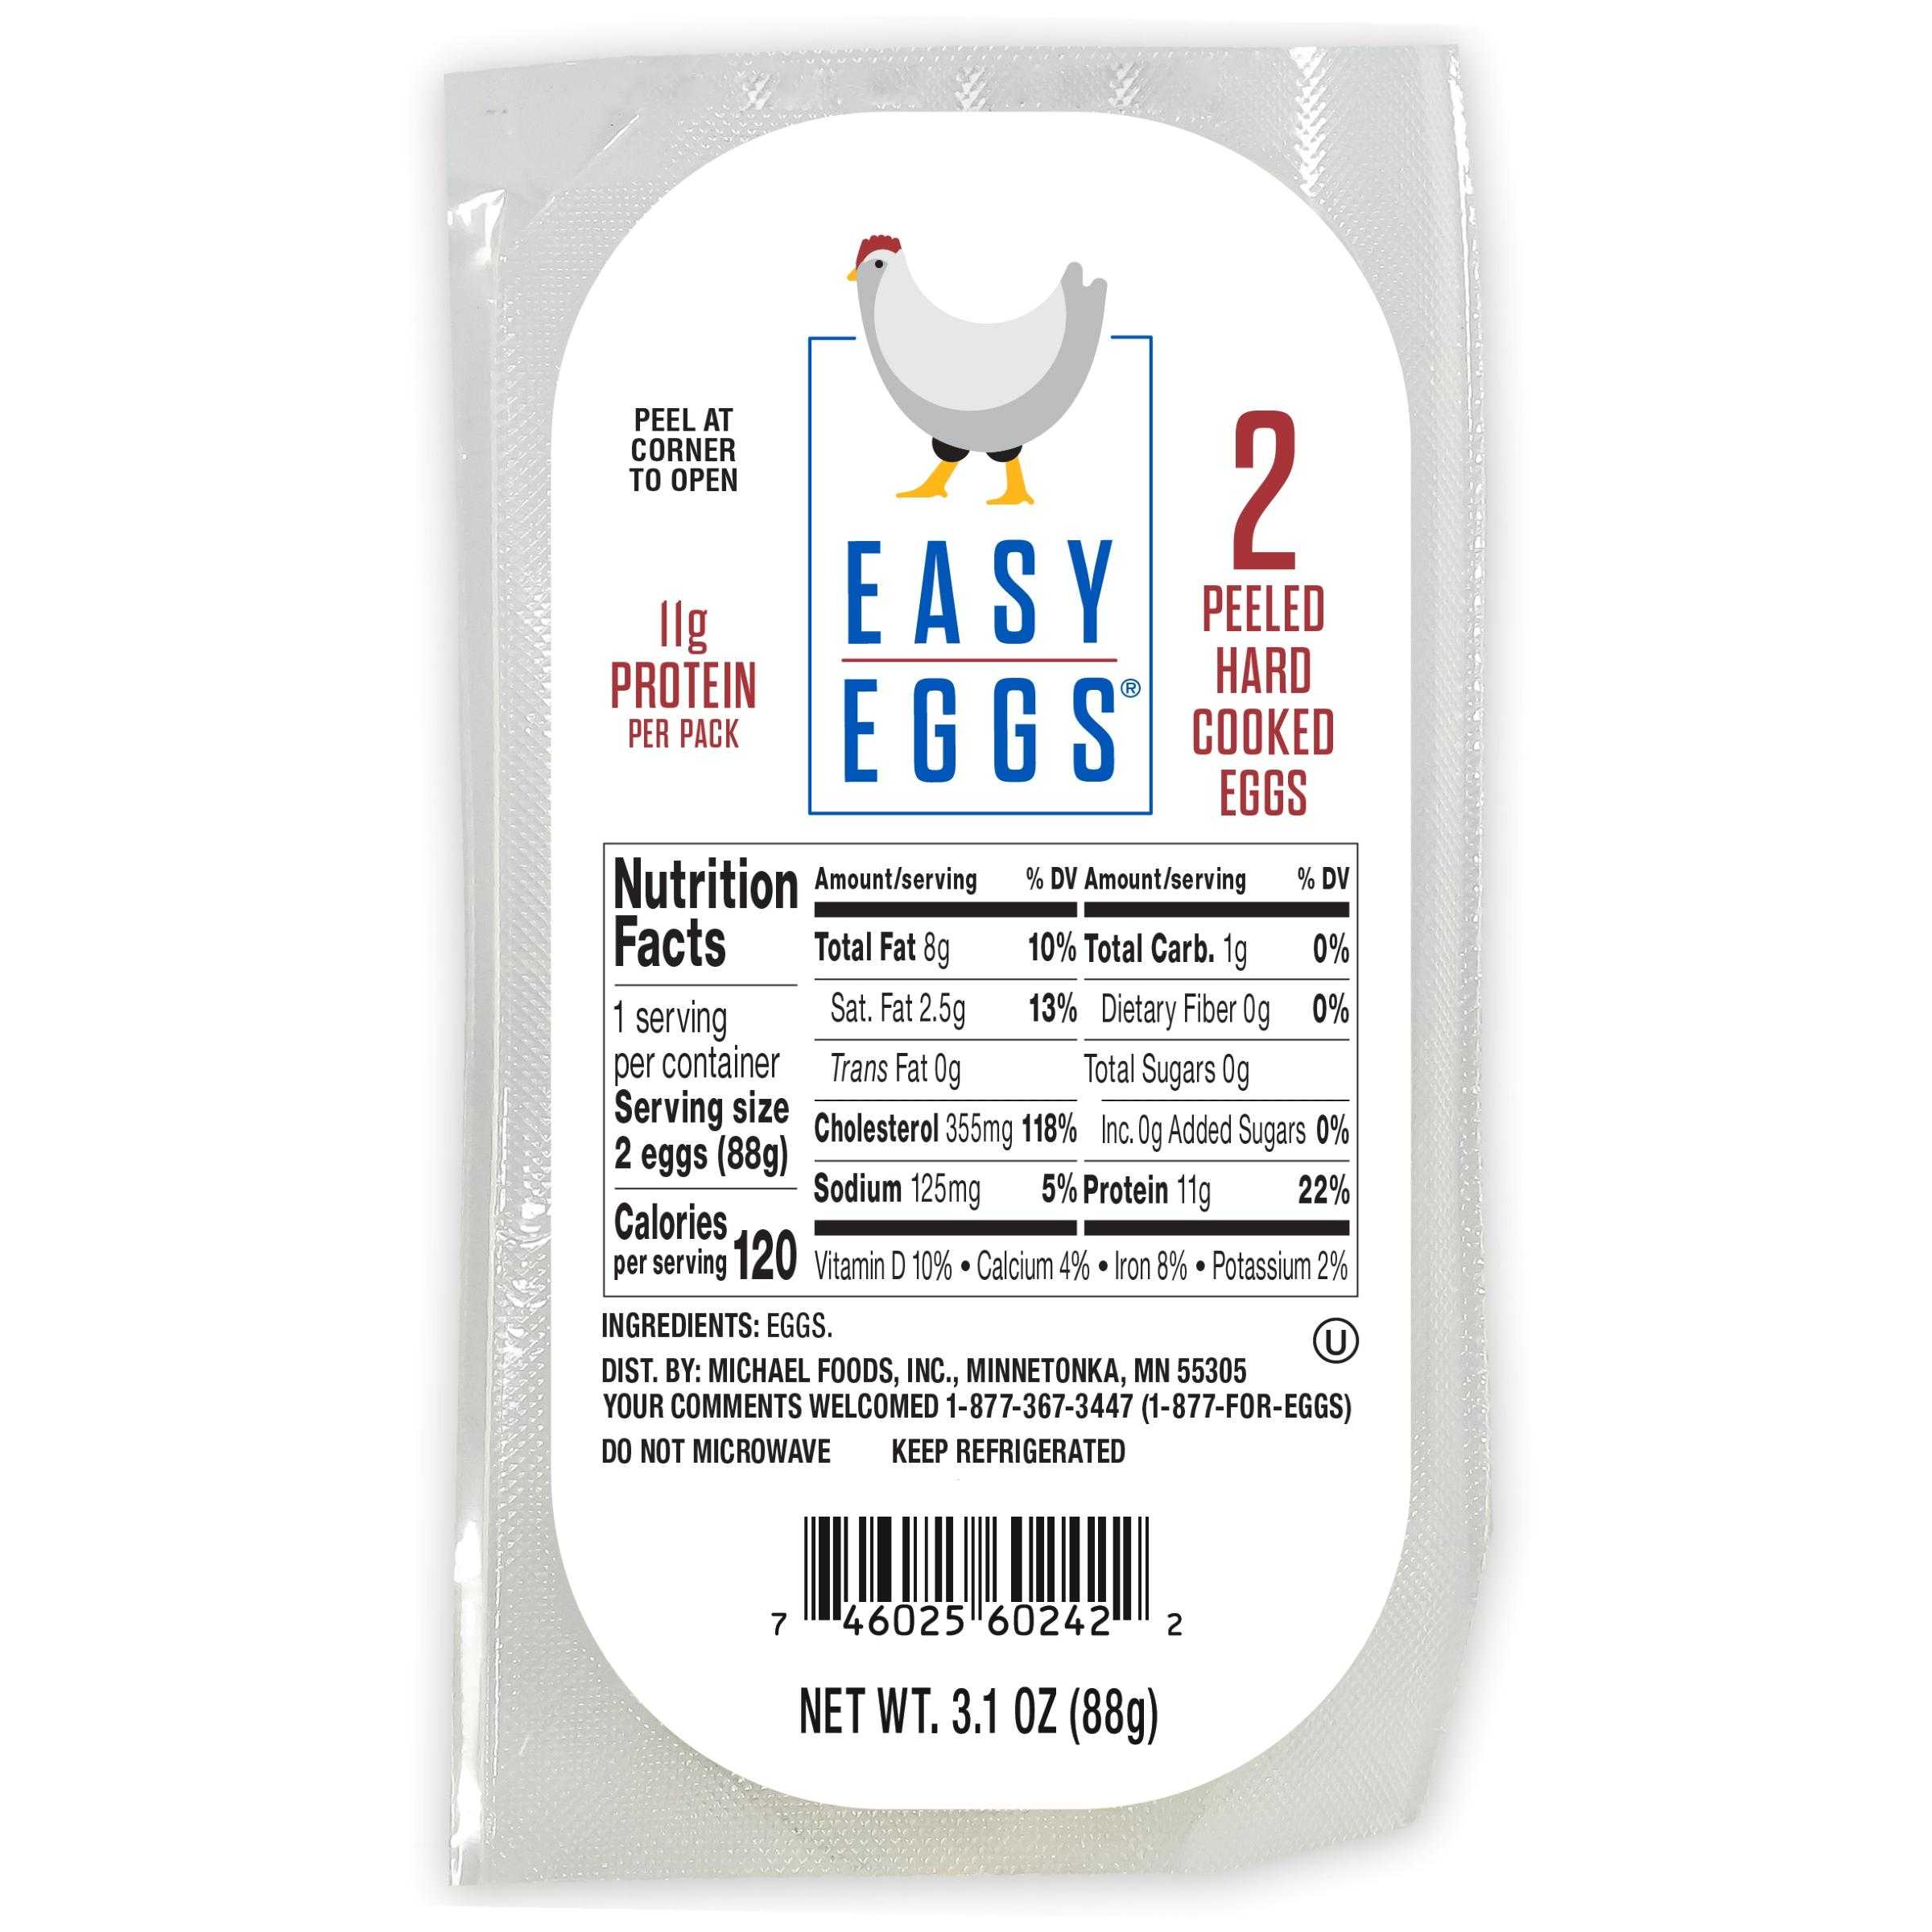 Easy Eggs® Peeled Hard Cooked Eggs, 14/2 Count Grab ‘N Go Dry Pack